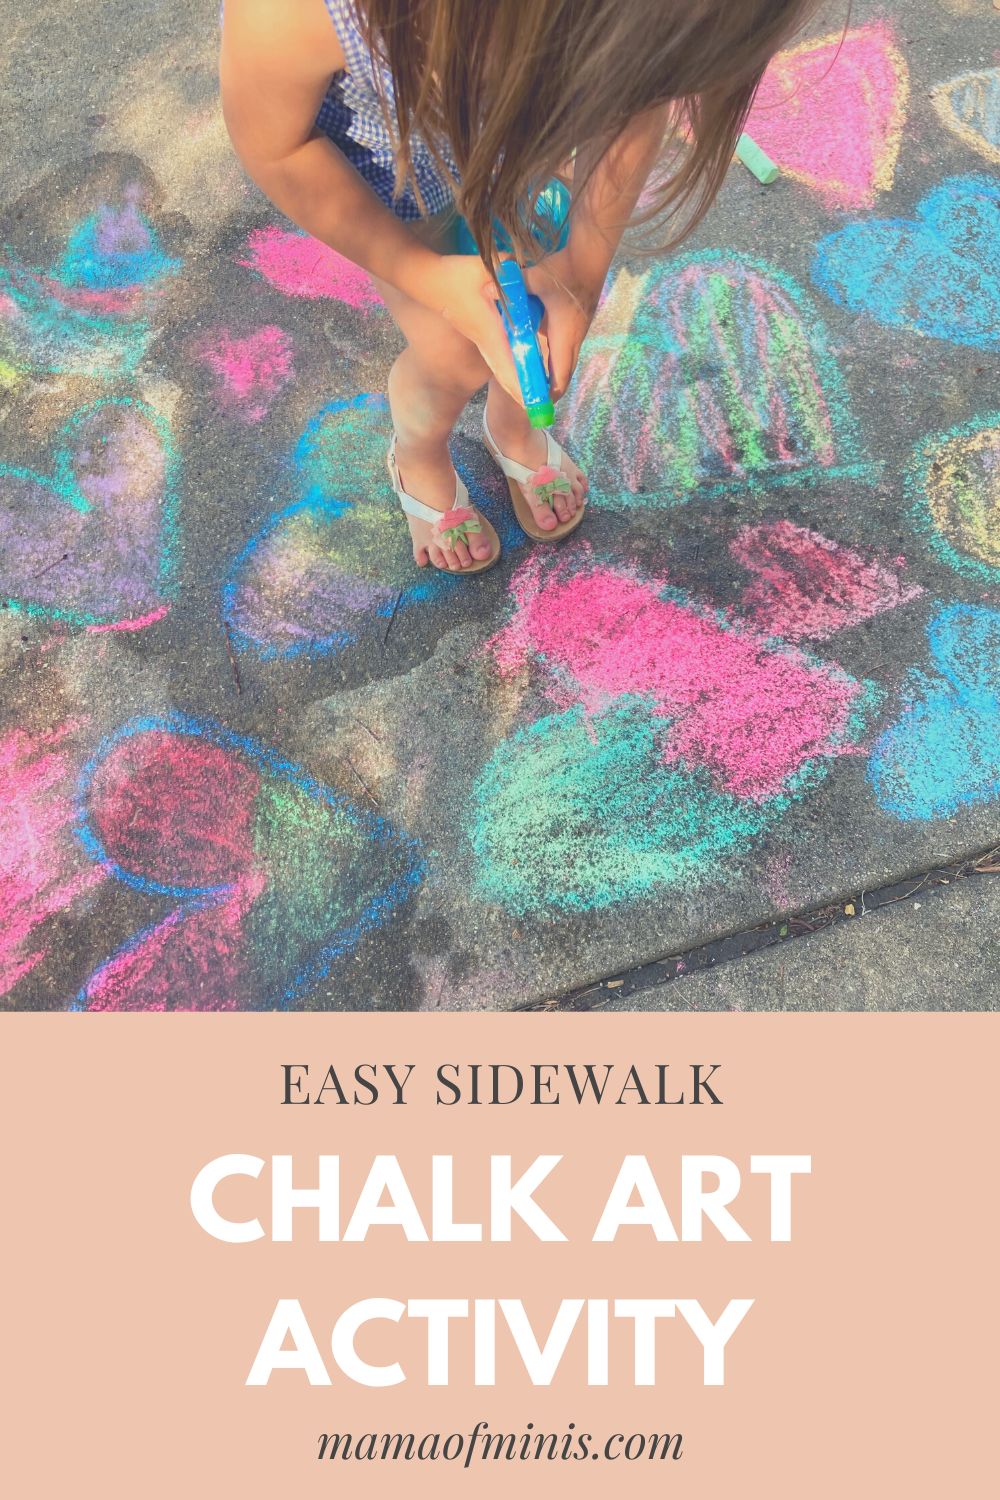 Easy Sidewalk Chalk Activity for Kids